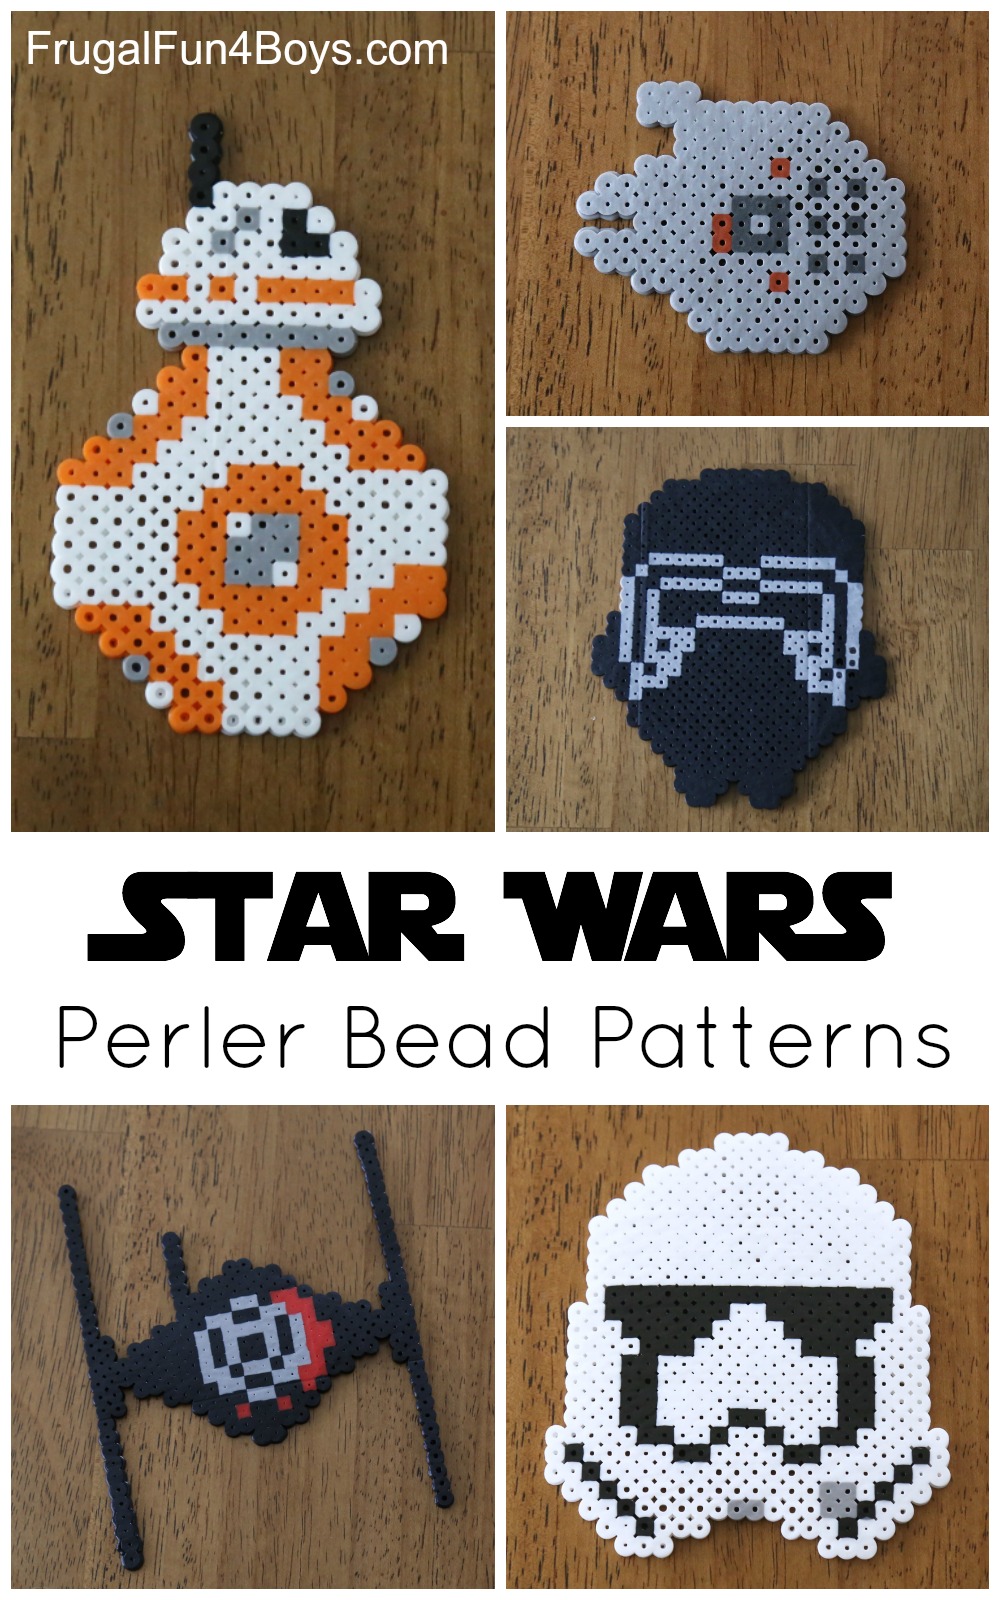 Star Wars The Force Awakens Perler Bead Patterns